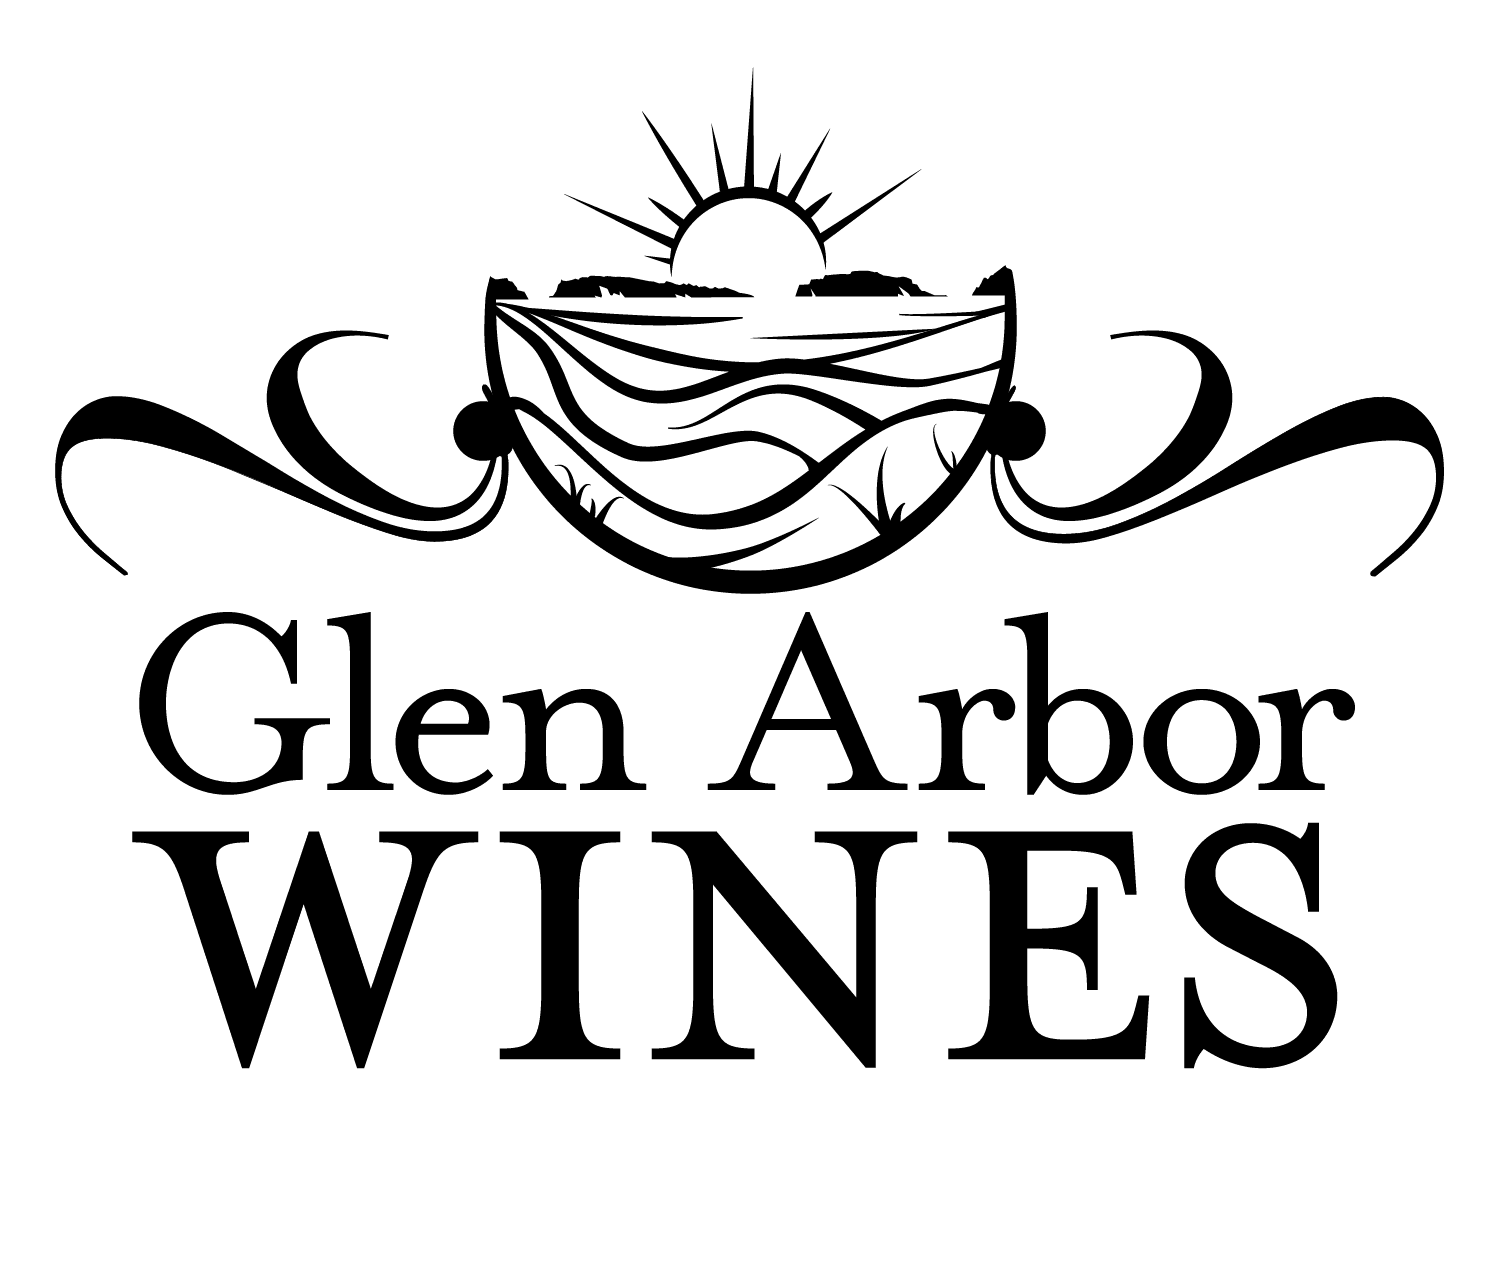 Glen Arbor wines logo Black